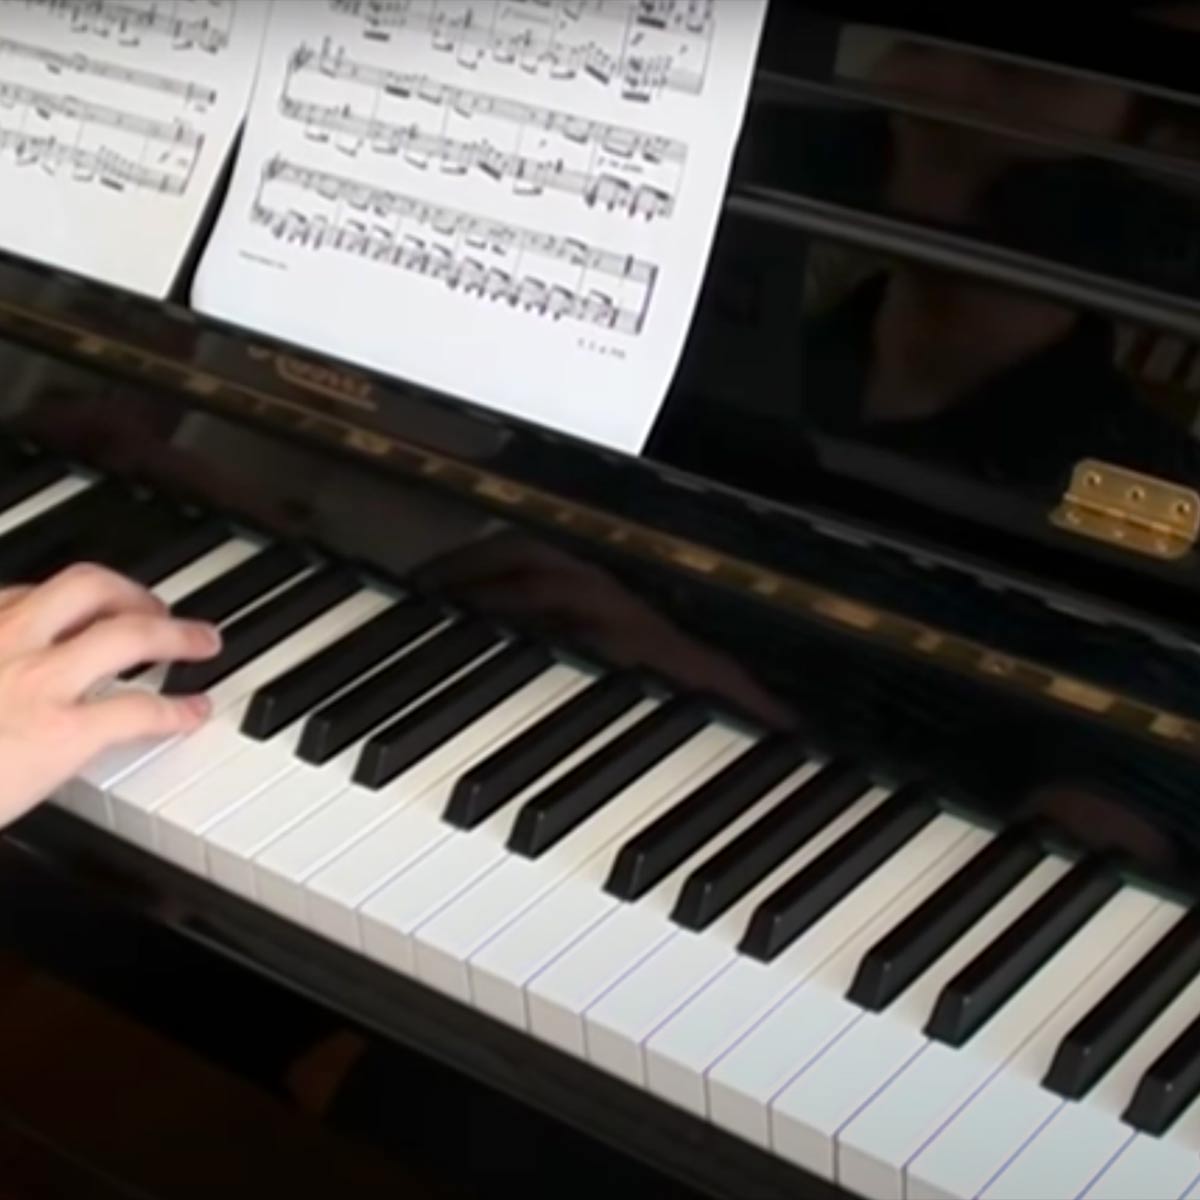 Play The Flea Waltz Piano Music Sheet On Virtual Piano - roblox piano japanese songs